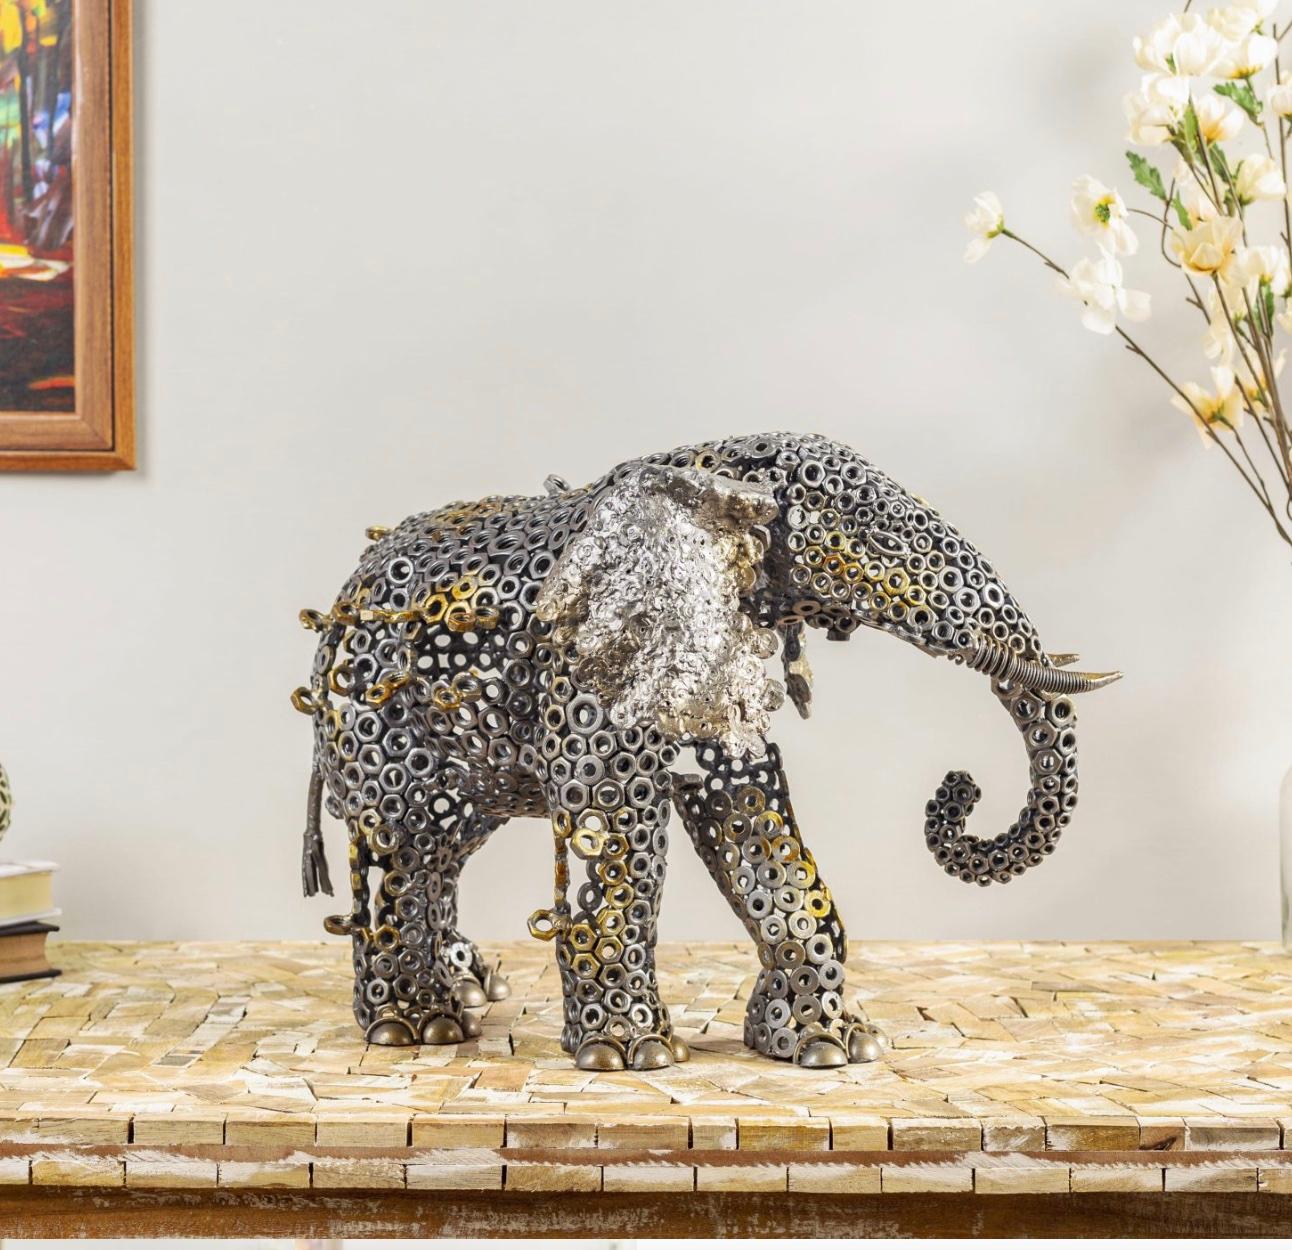  Elephant - Sculpture by Arun A